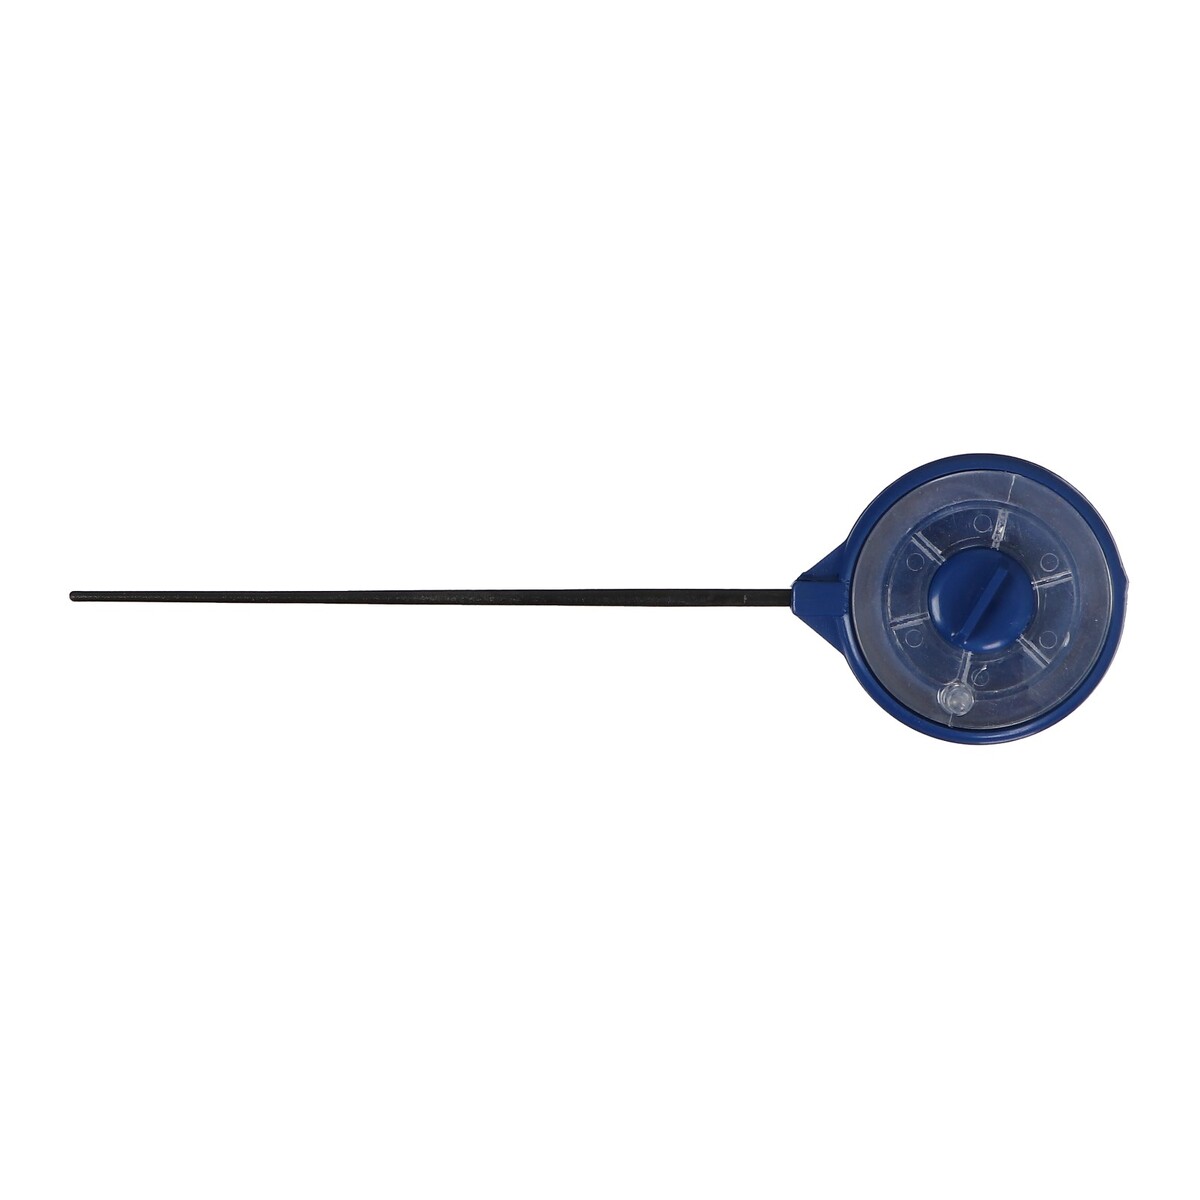 Удочка зимняя балалайка, диаметр катушки 4.5 см, цвет синий, hfb-22 No brand